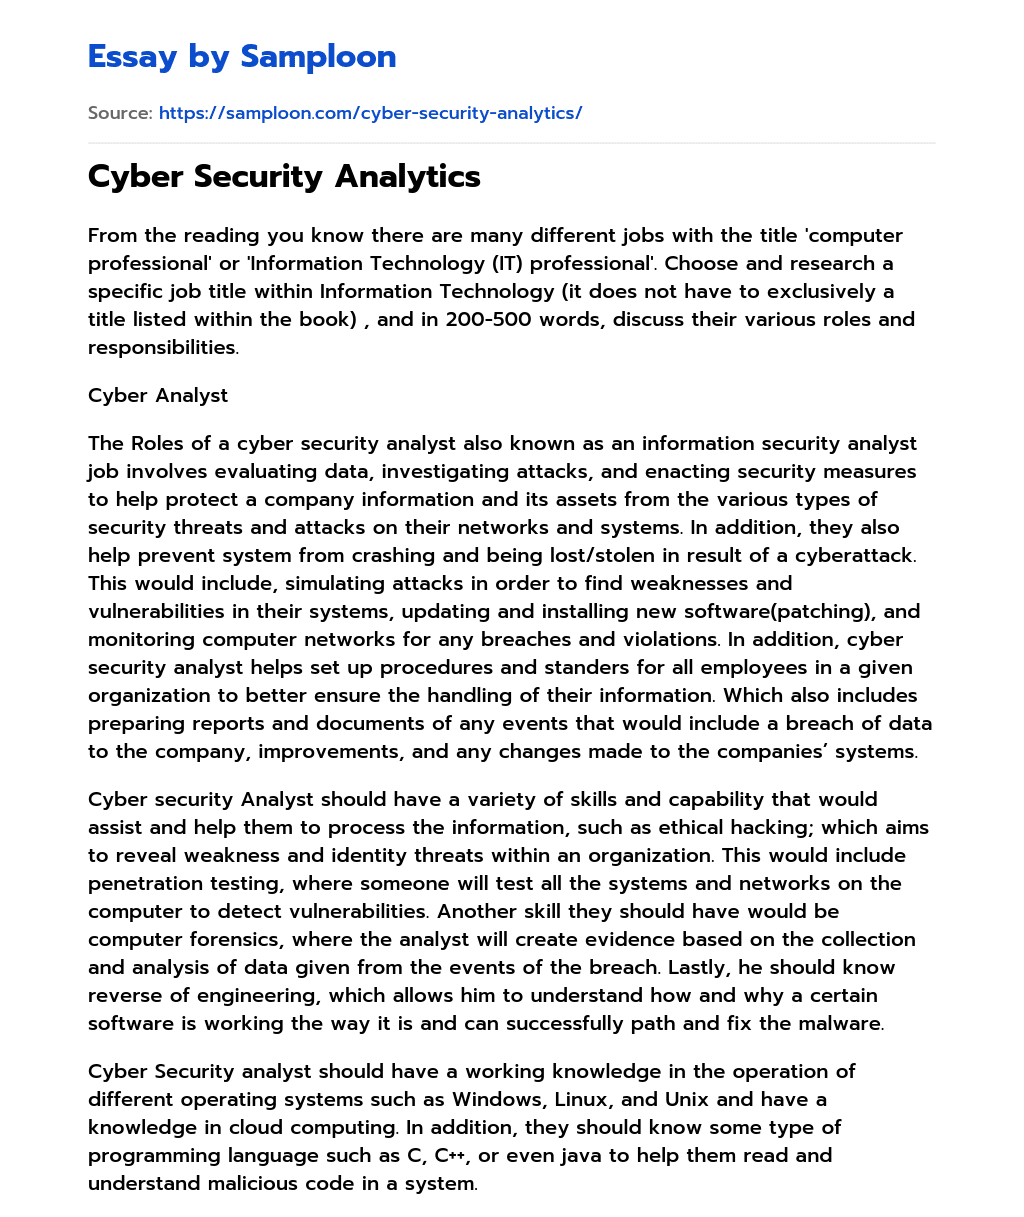 Cyber Security Analytics essay